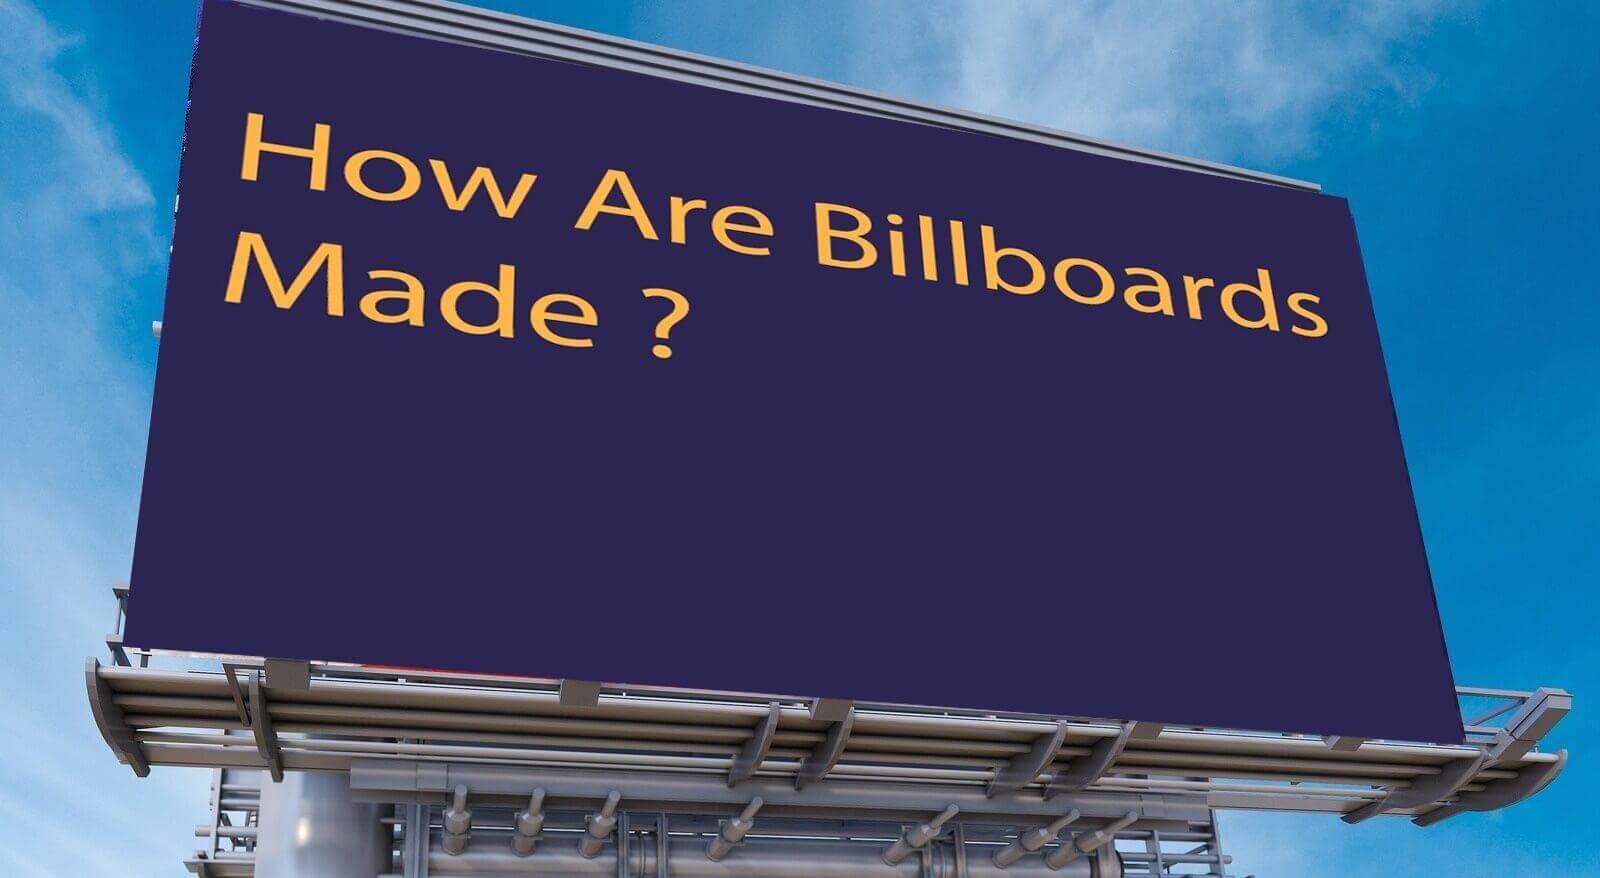 Design of Billboards